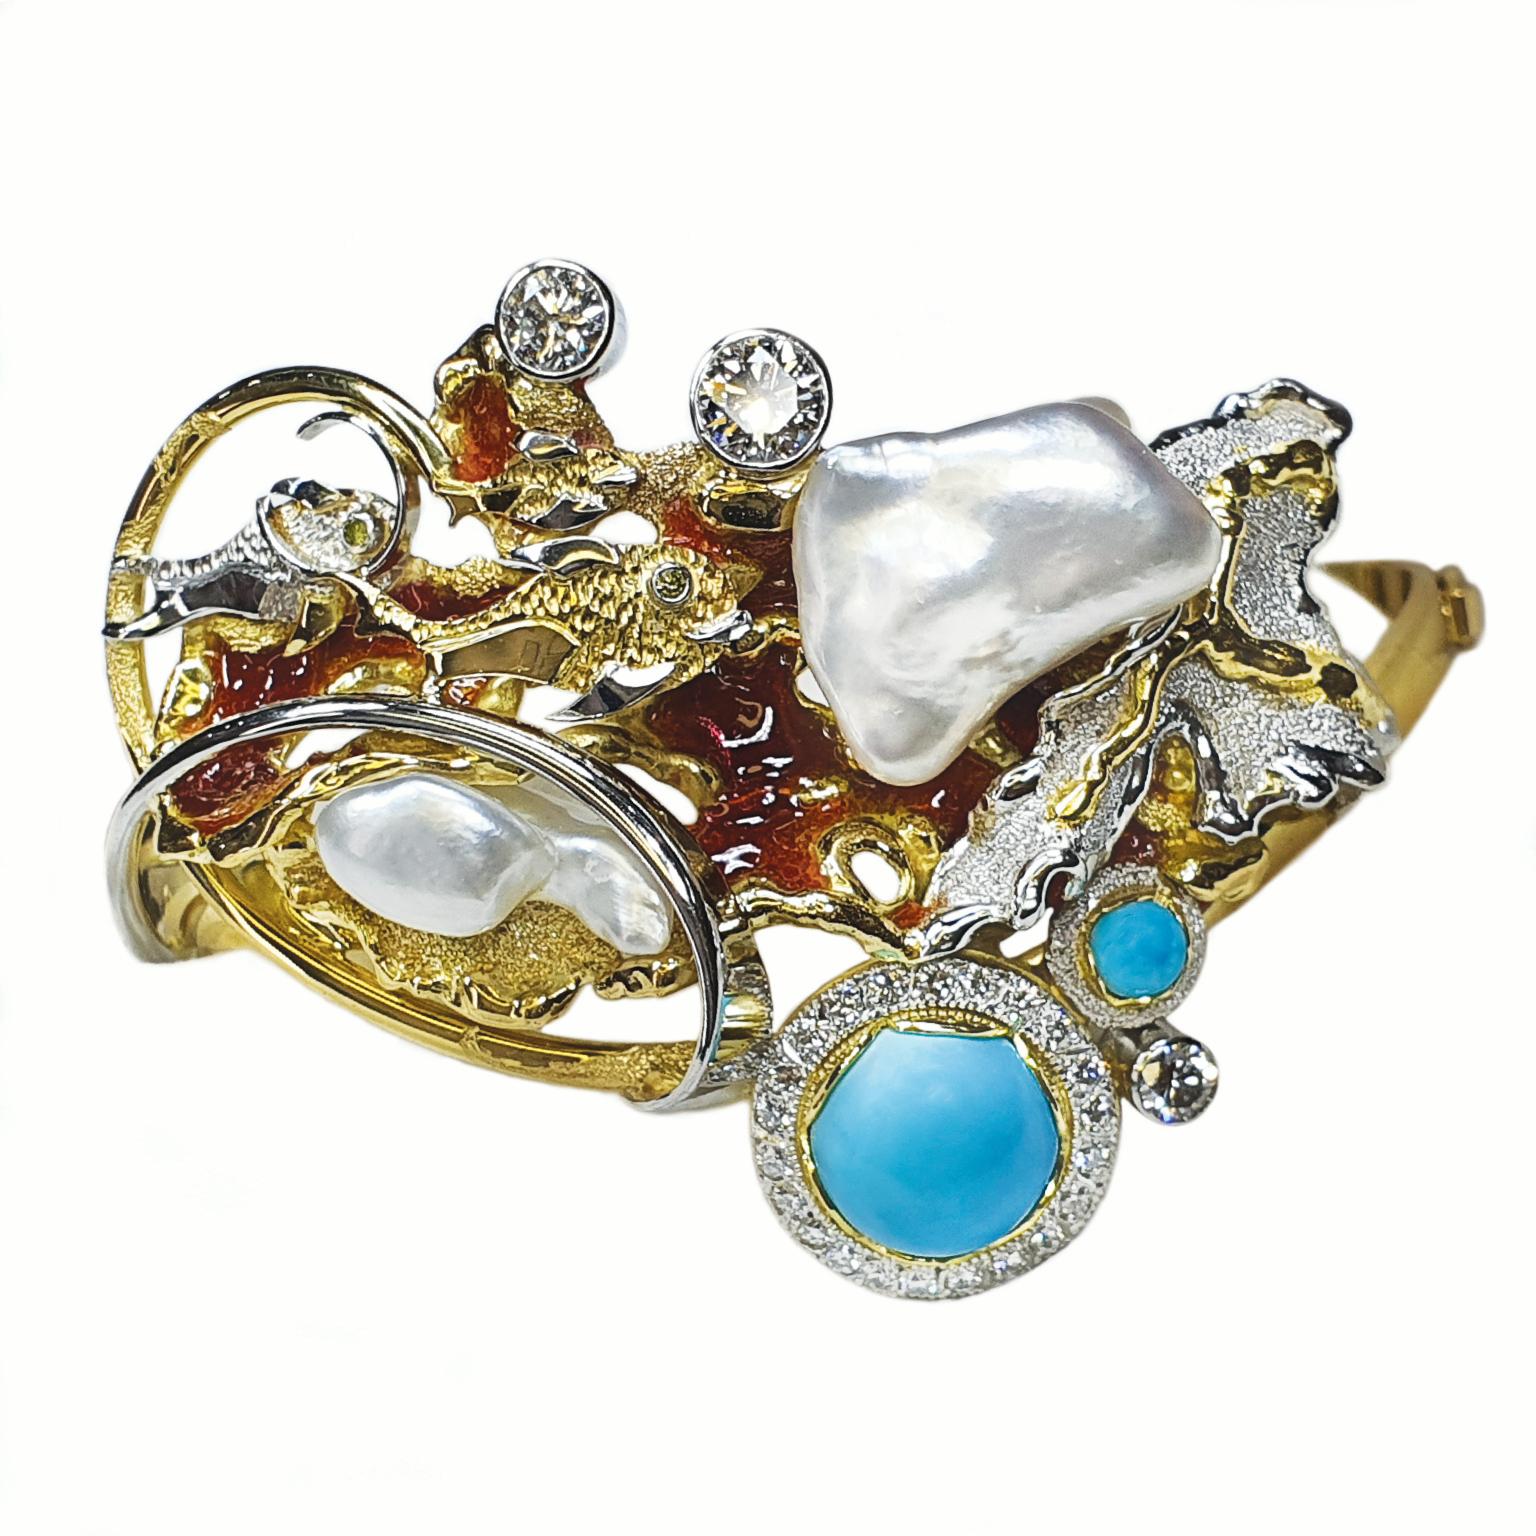 Paul Amey 18K Gold, "Sleeping Beauty" Turquoise, Diamond and Pearl Bangle